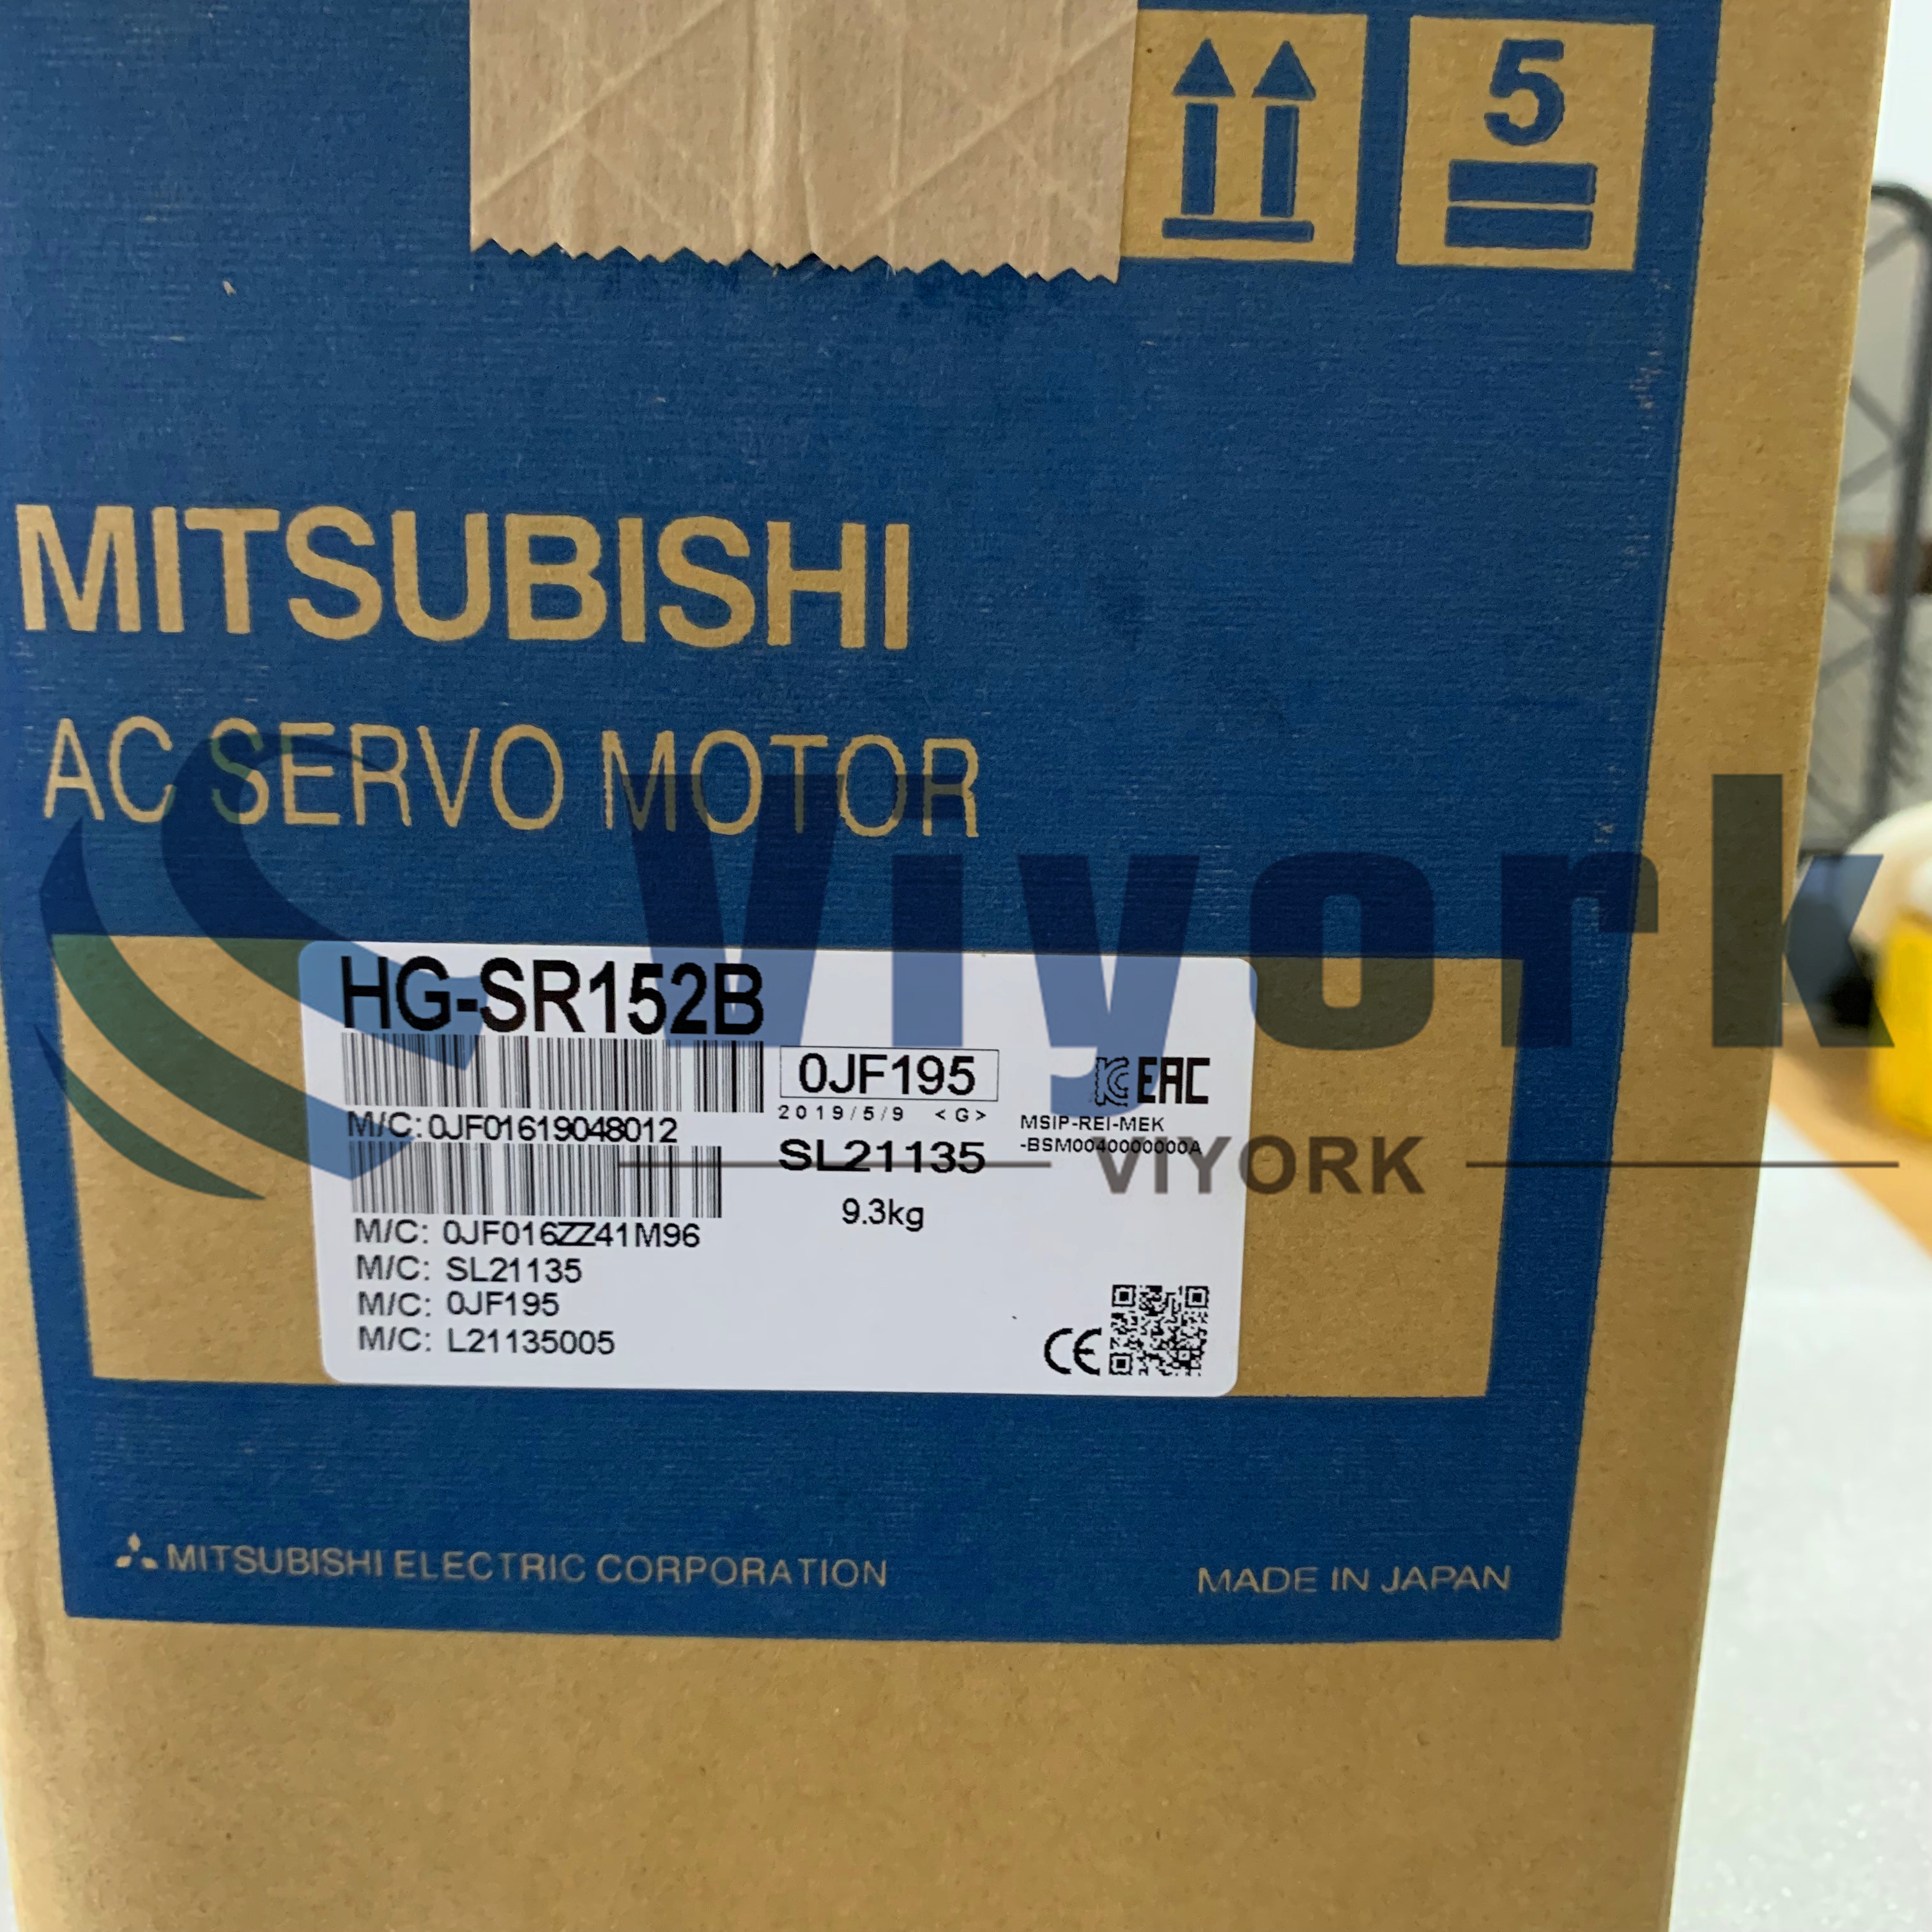 Mitsubishi HG-SR152B AC SERVO MOTOR 1.5KW 7.2NM 200VAC 9.4AM BRAKE 2000RPM NEW